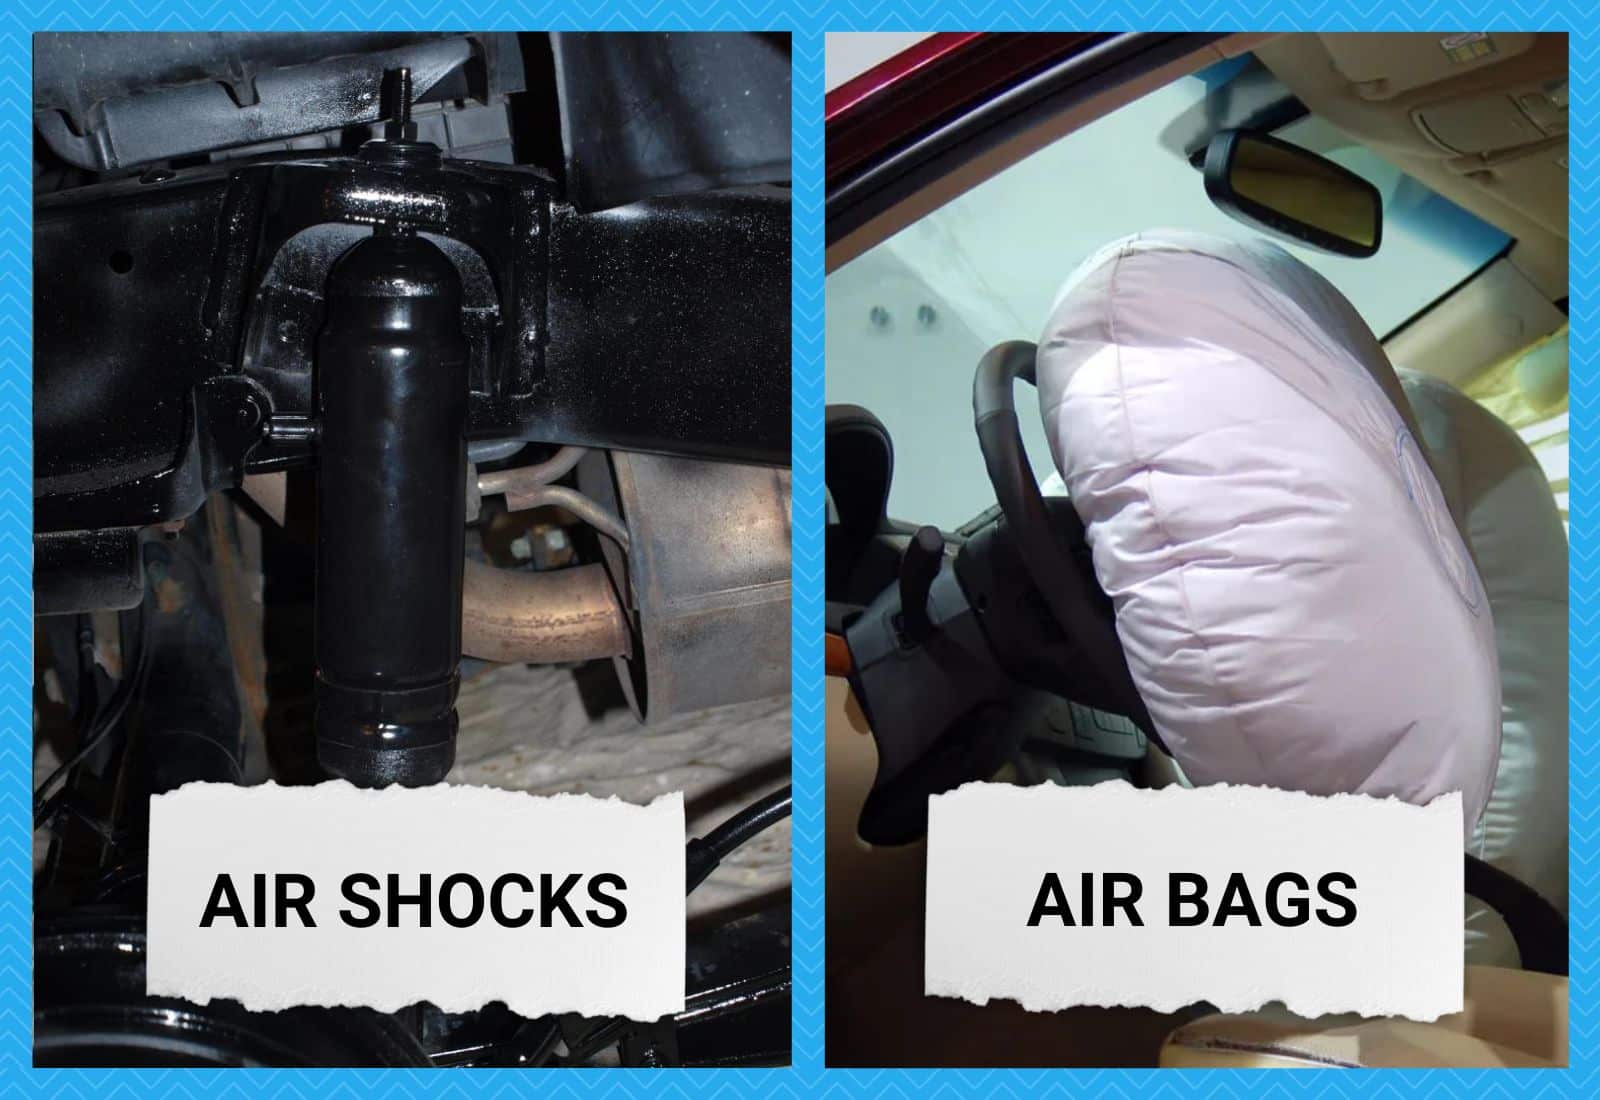 Air Shocks vs Air Bags